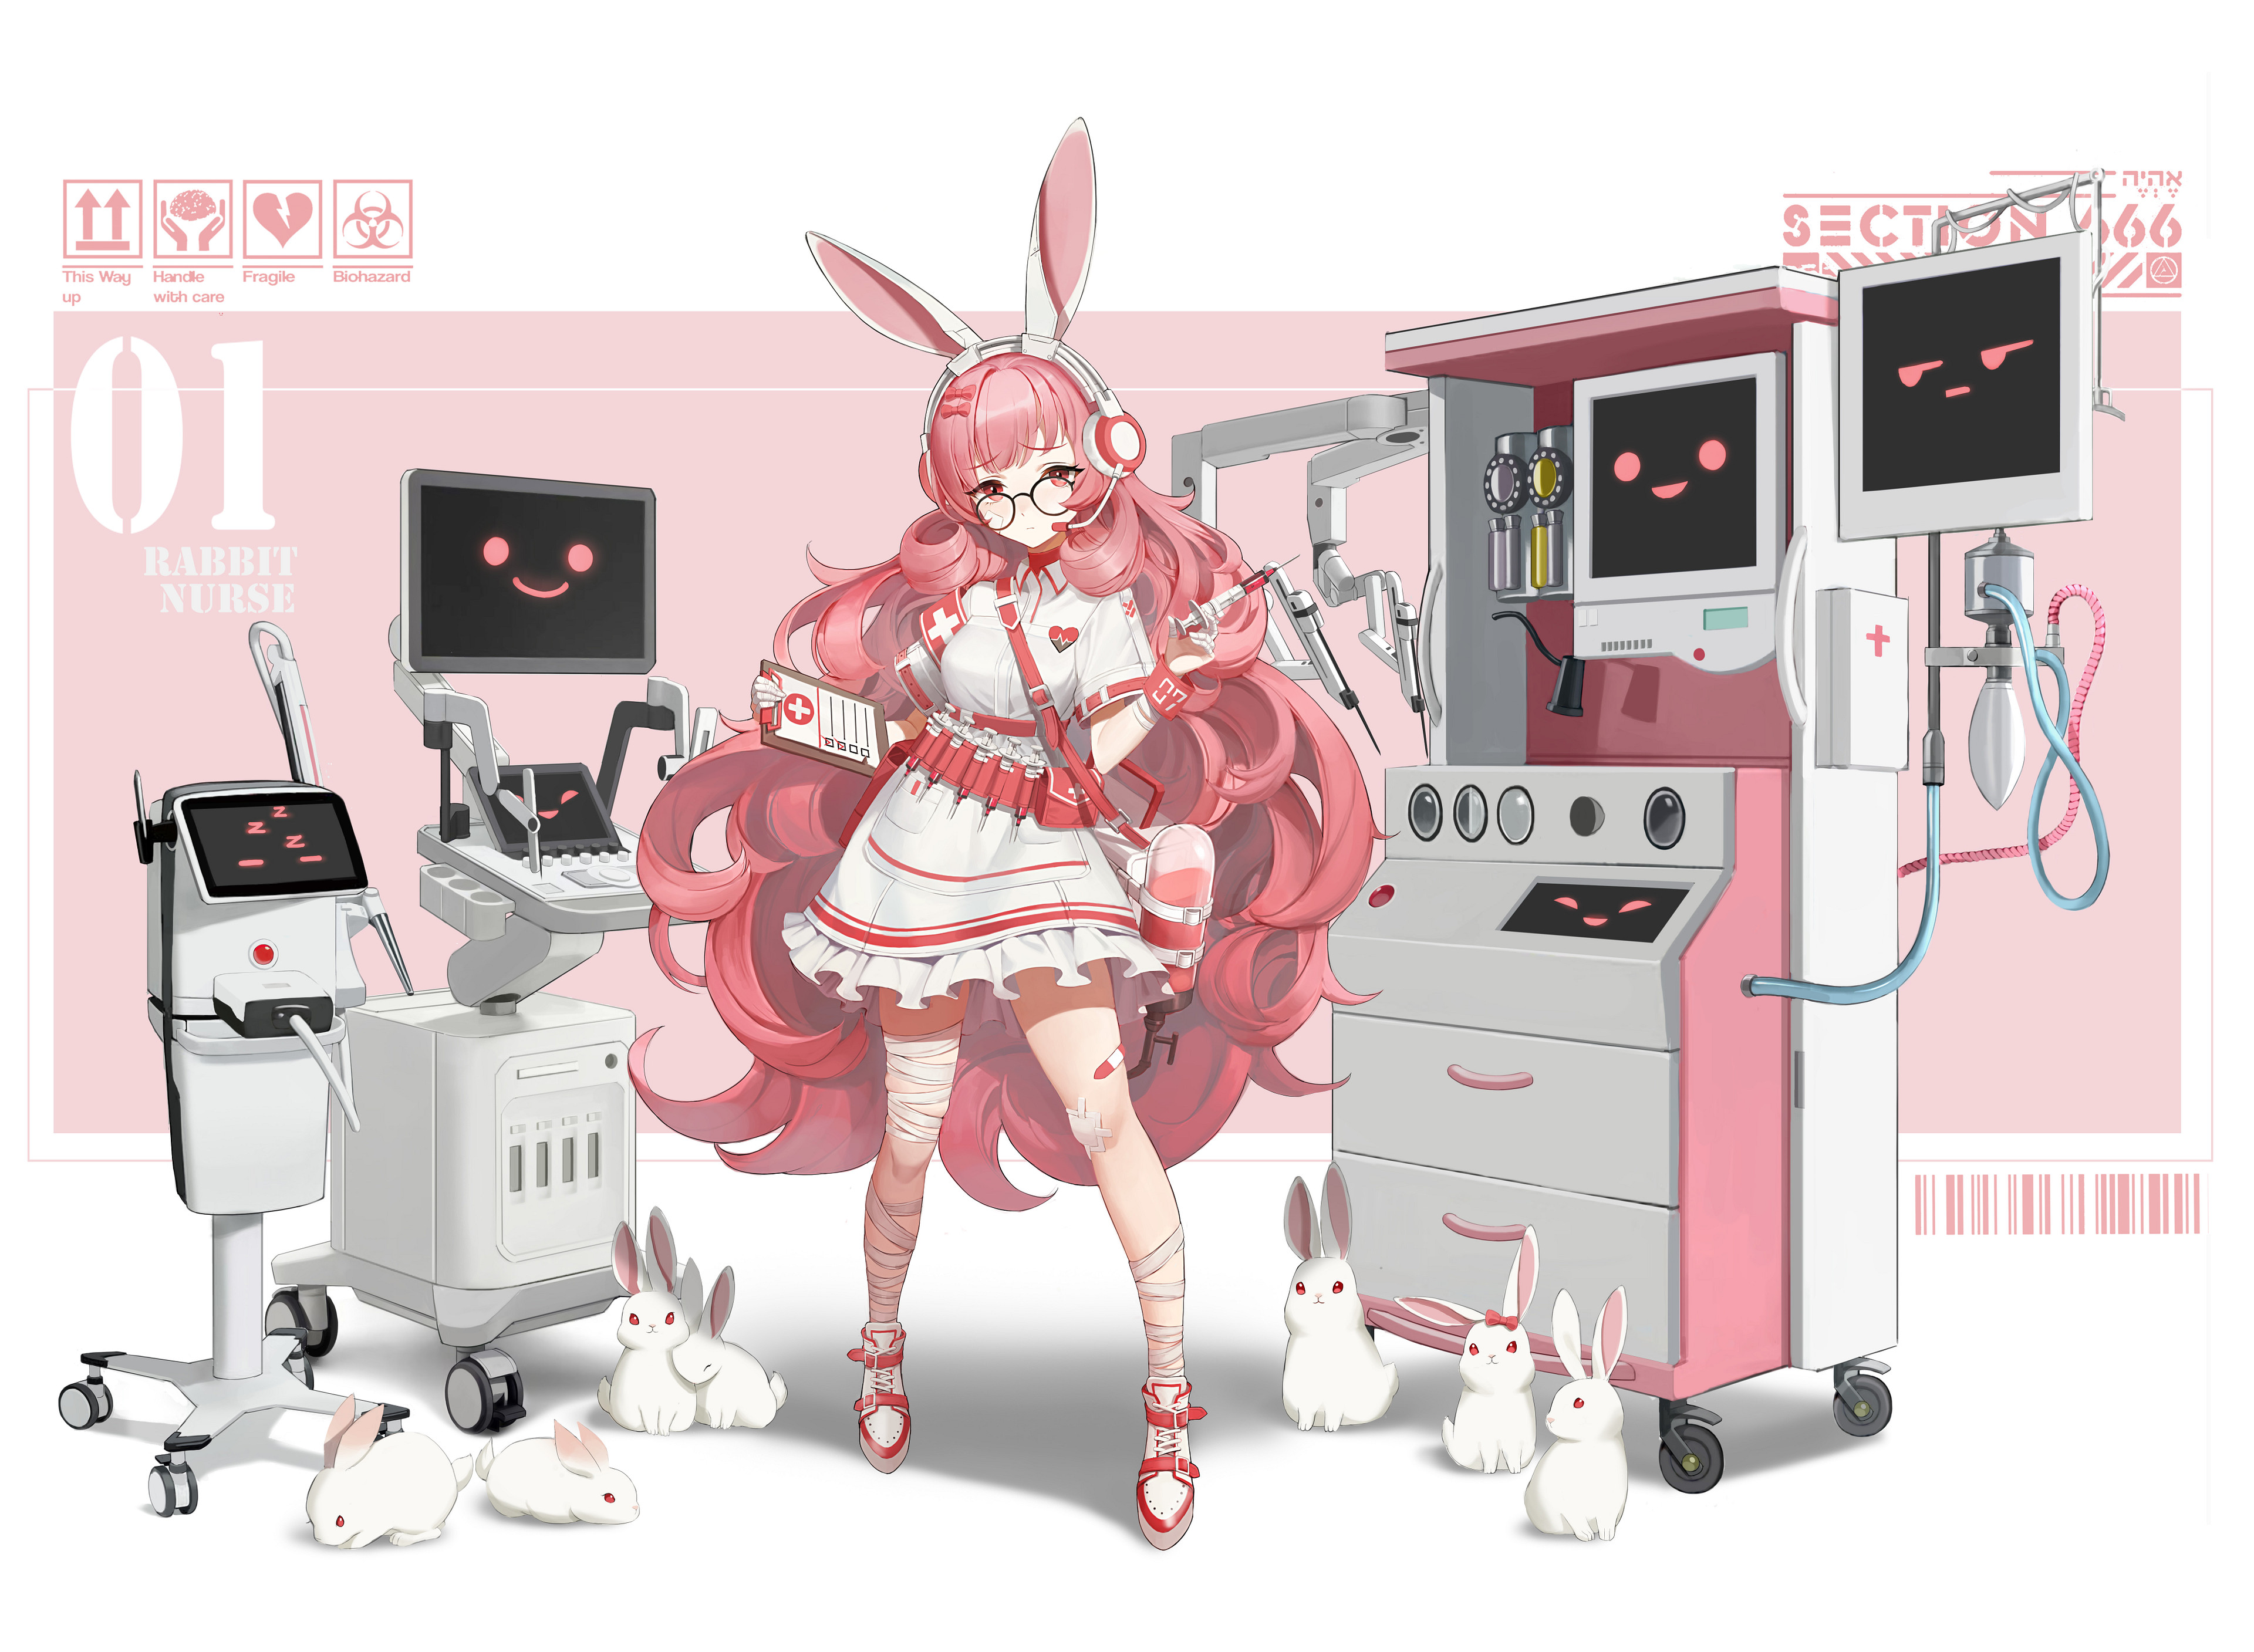 Rabbit nurse by JunYoung Shin